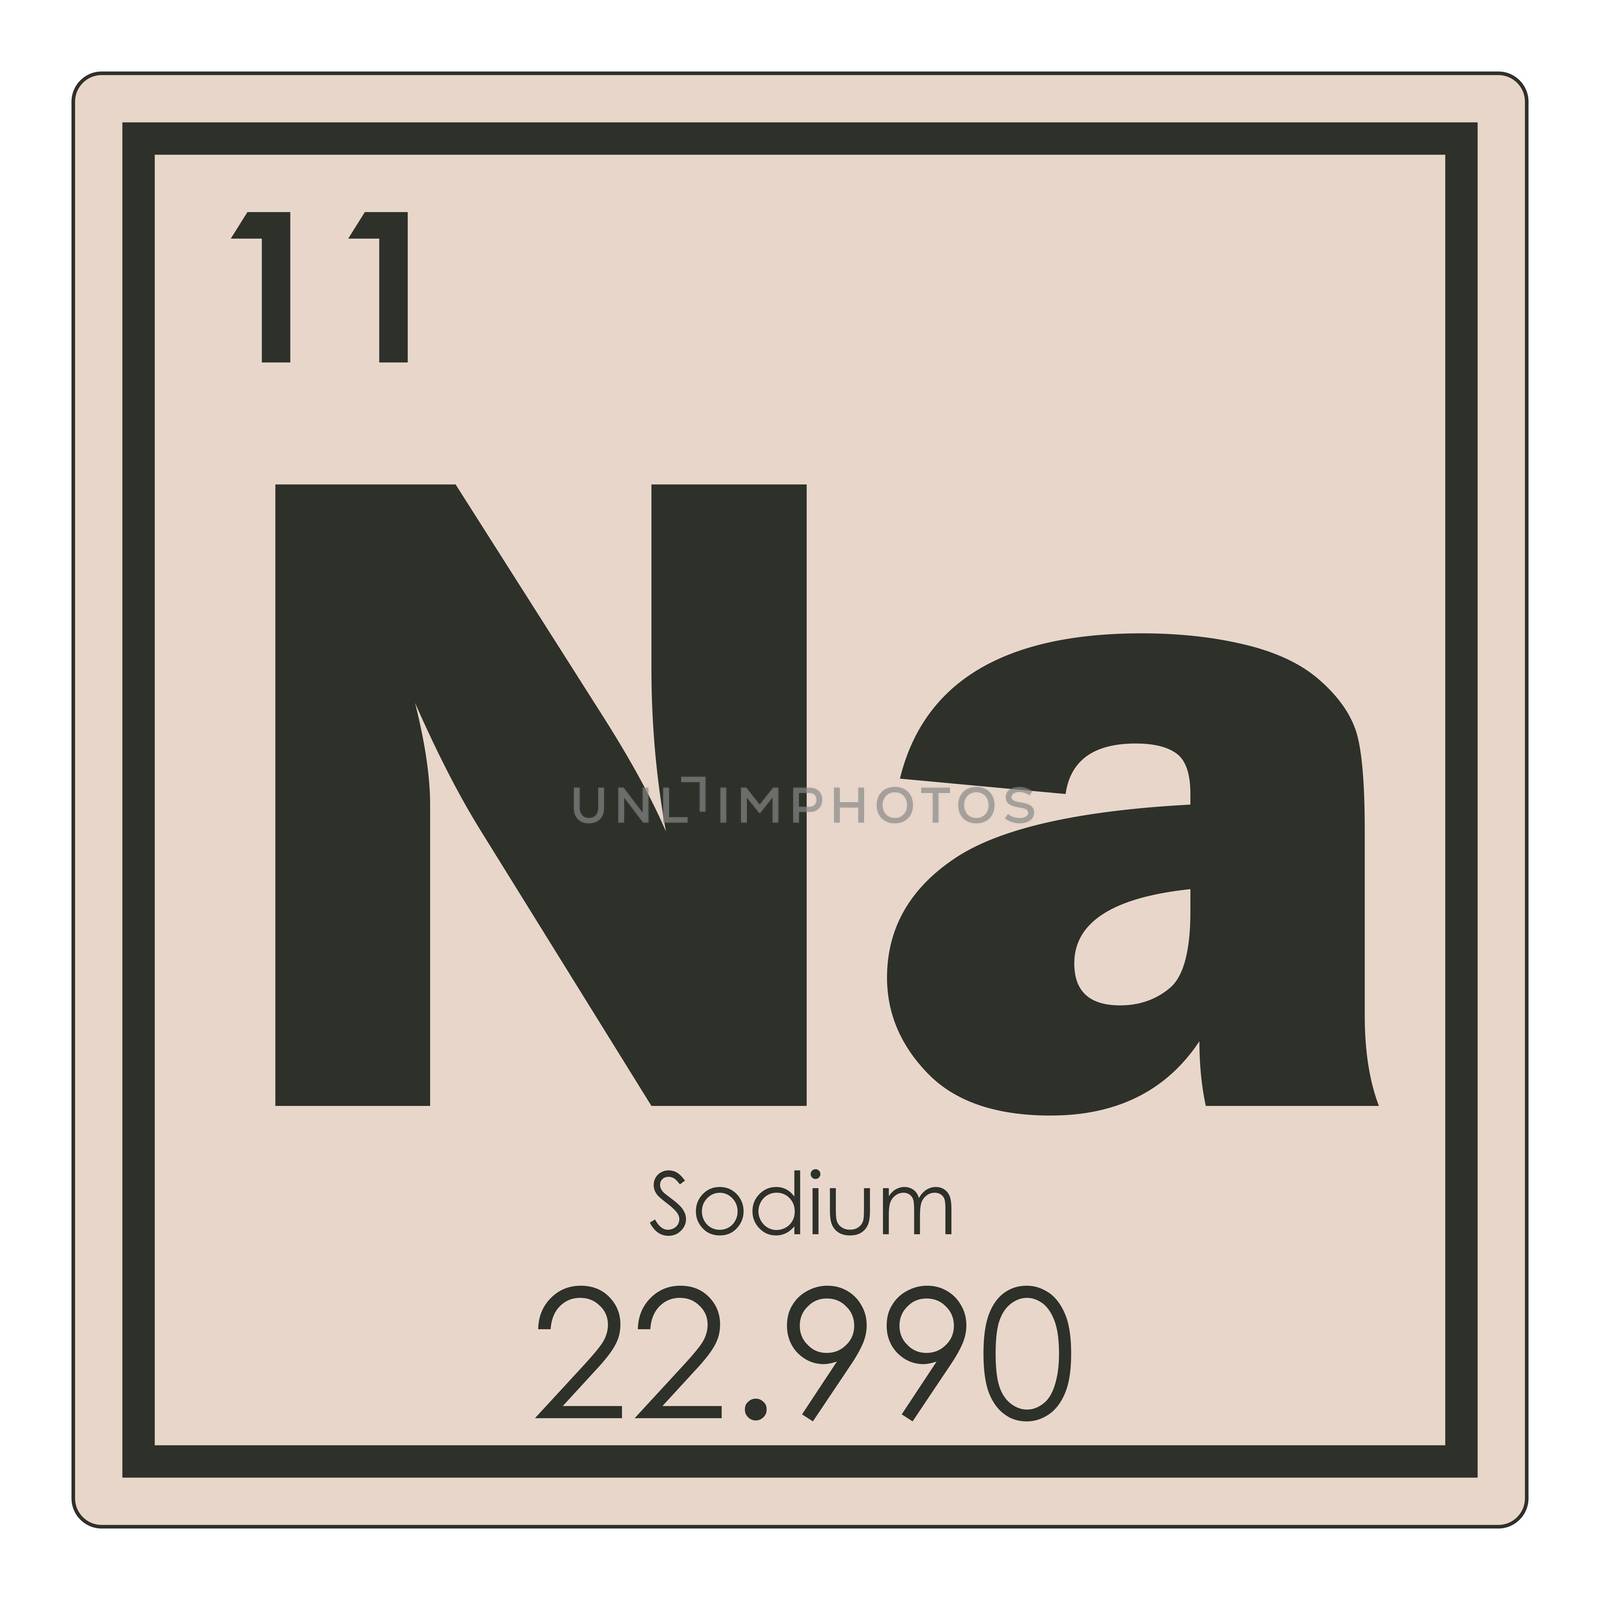 Sodium chemical element by tony4urban